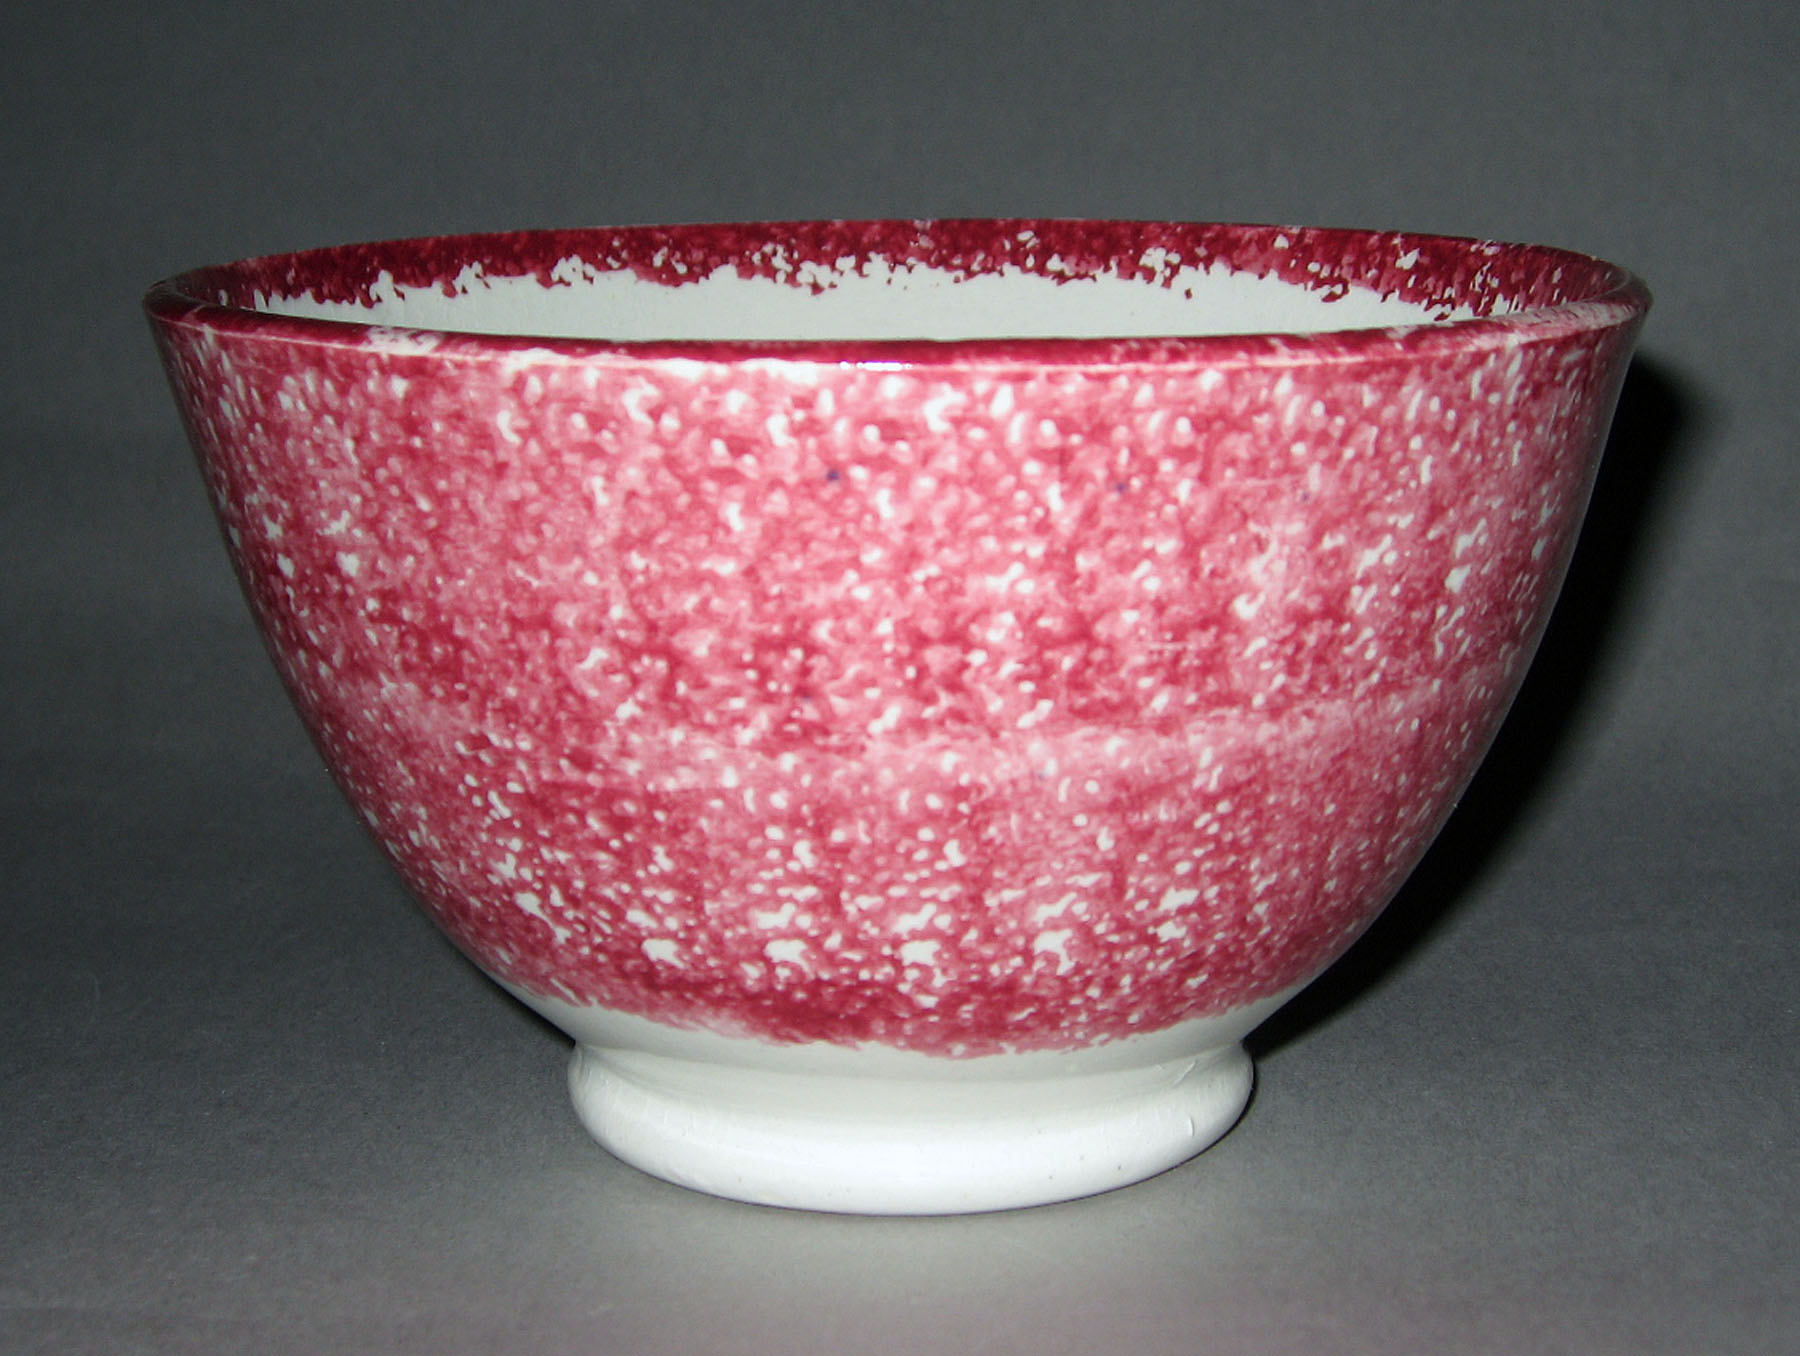 1965.0865.001 Spatterware bowl